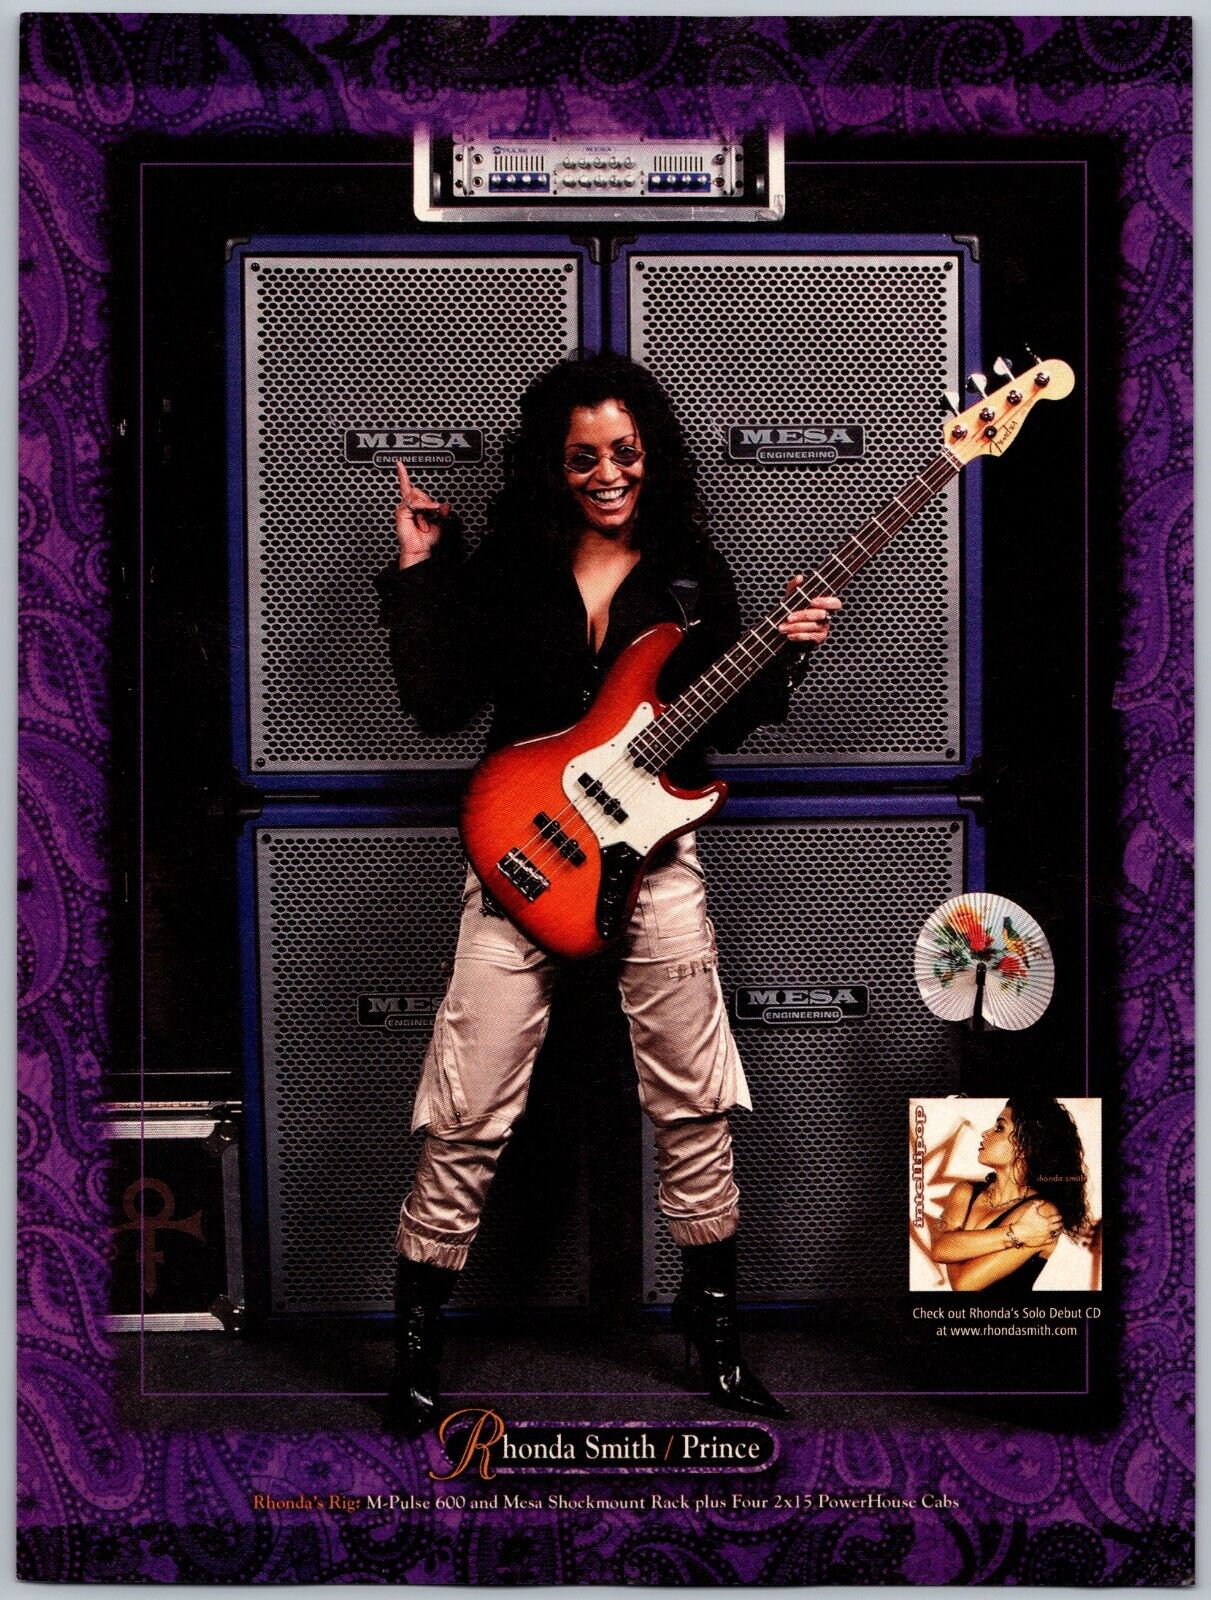 Rhonda Smith's Mesa Boogie M-Pulse 600 Sept, 2004 Full Page Print Ad